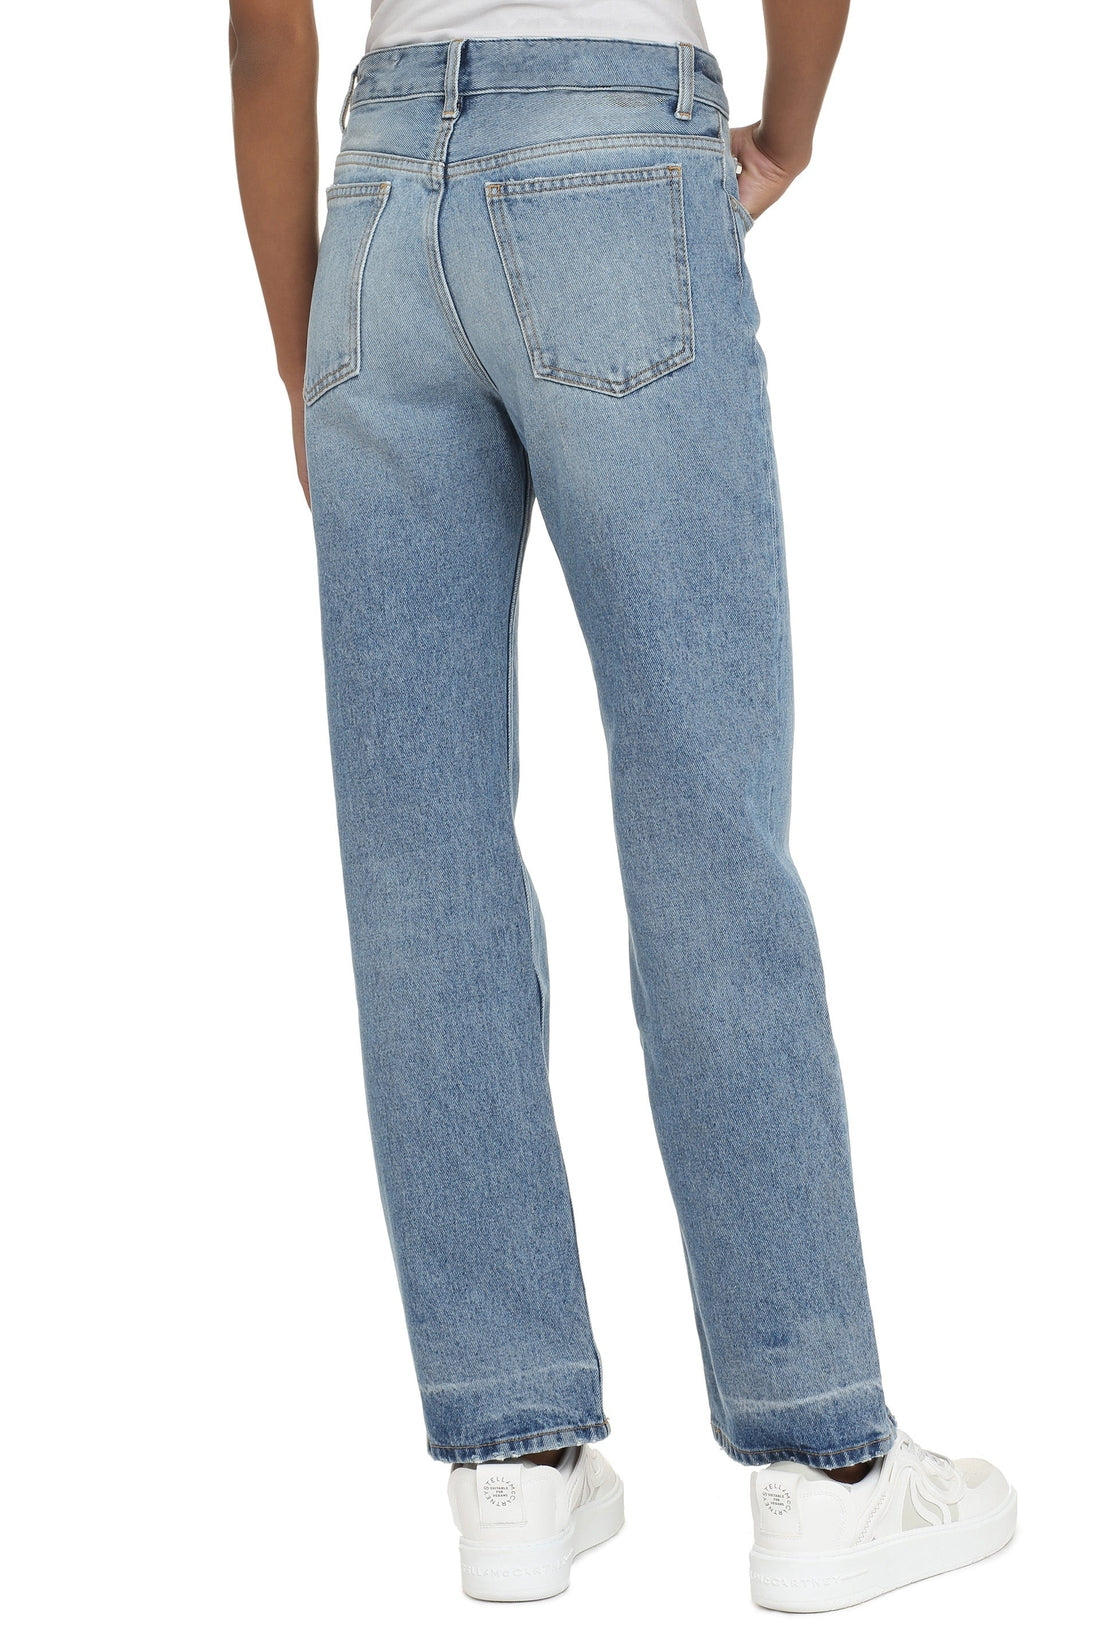 Off-White-OUTLET-SALE-90s fit jeans-ARCHIVIST